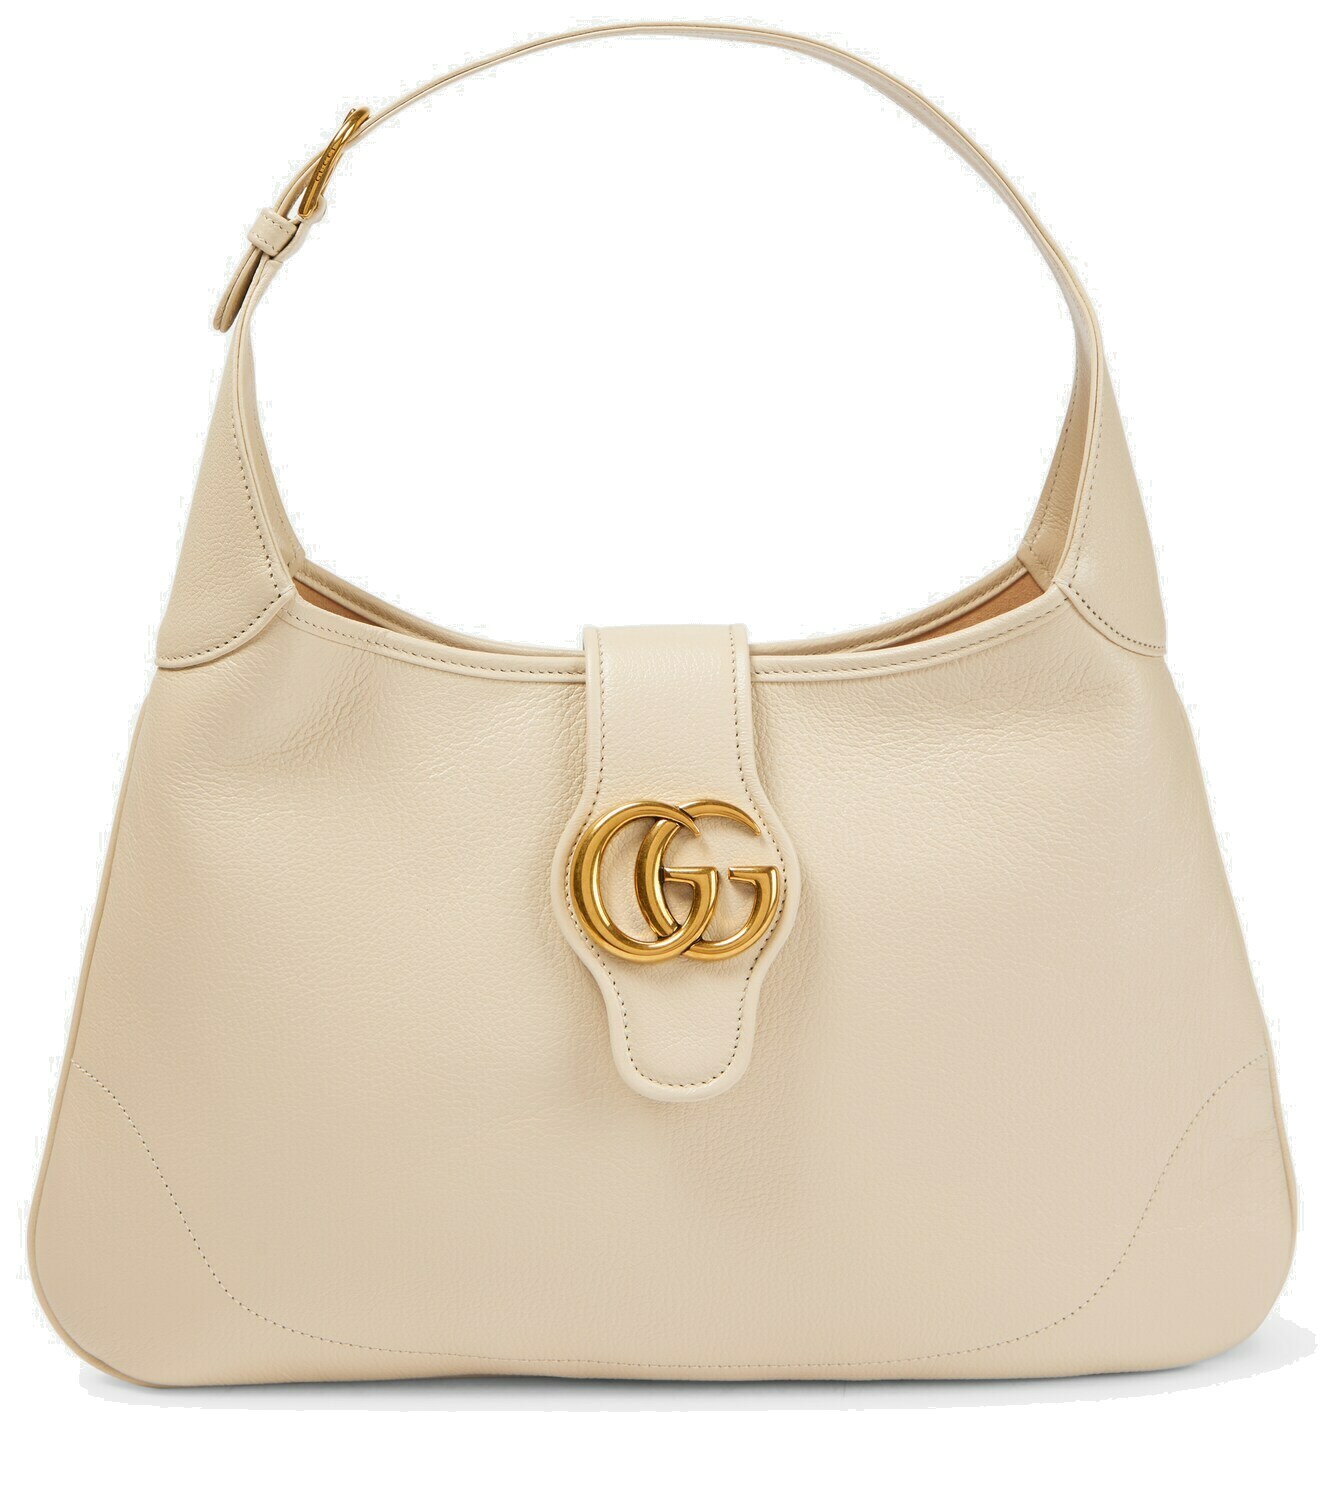 Gucci - Aphrodite Medium leather shoulder bag Gucci